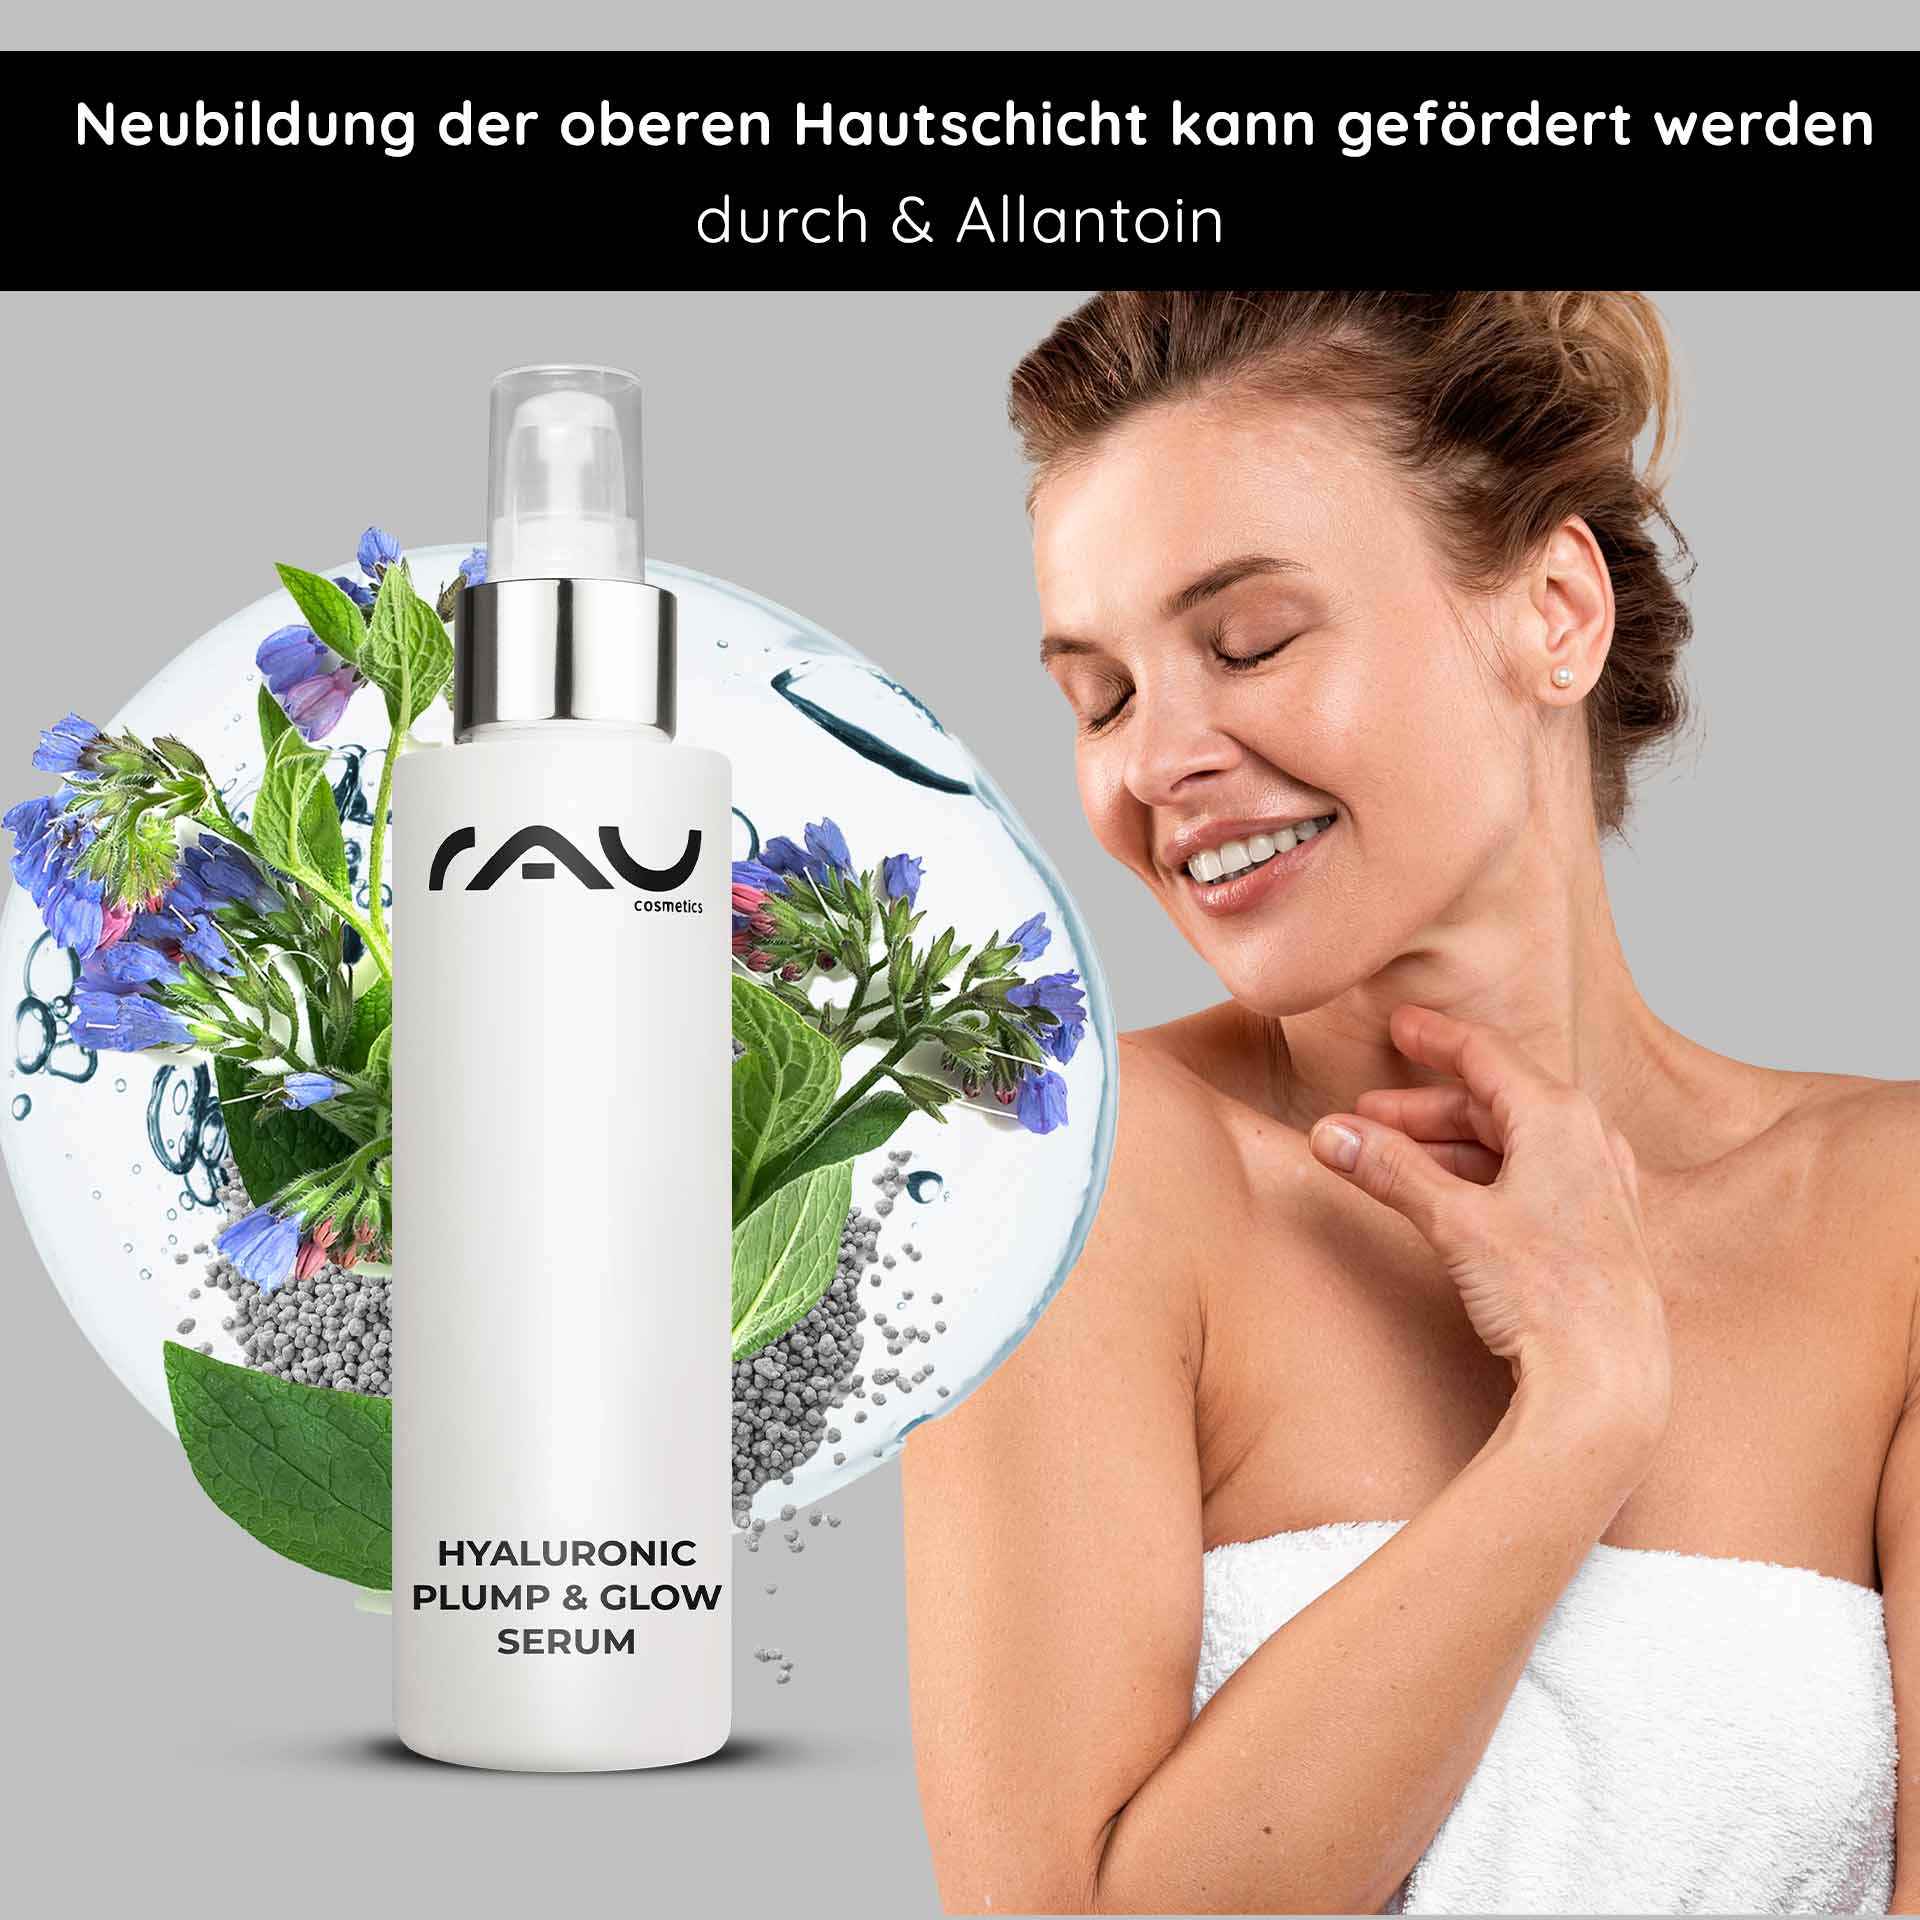 RAU Cosmetics Hyaluronic Plump &amp; Glow Serum 100 ml